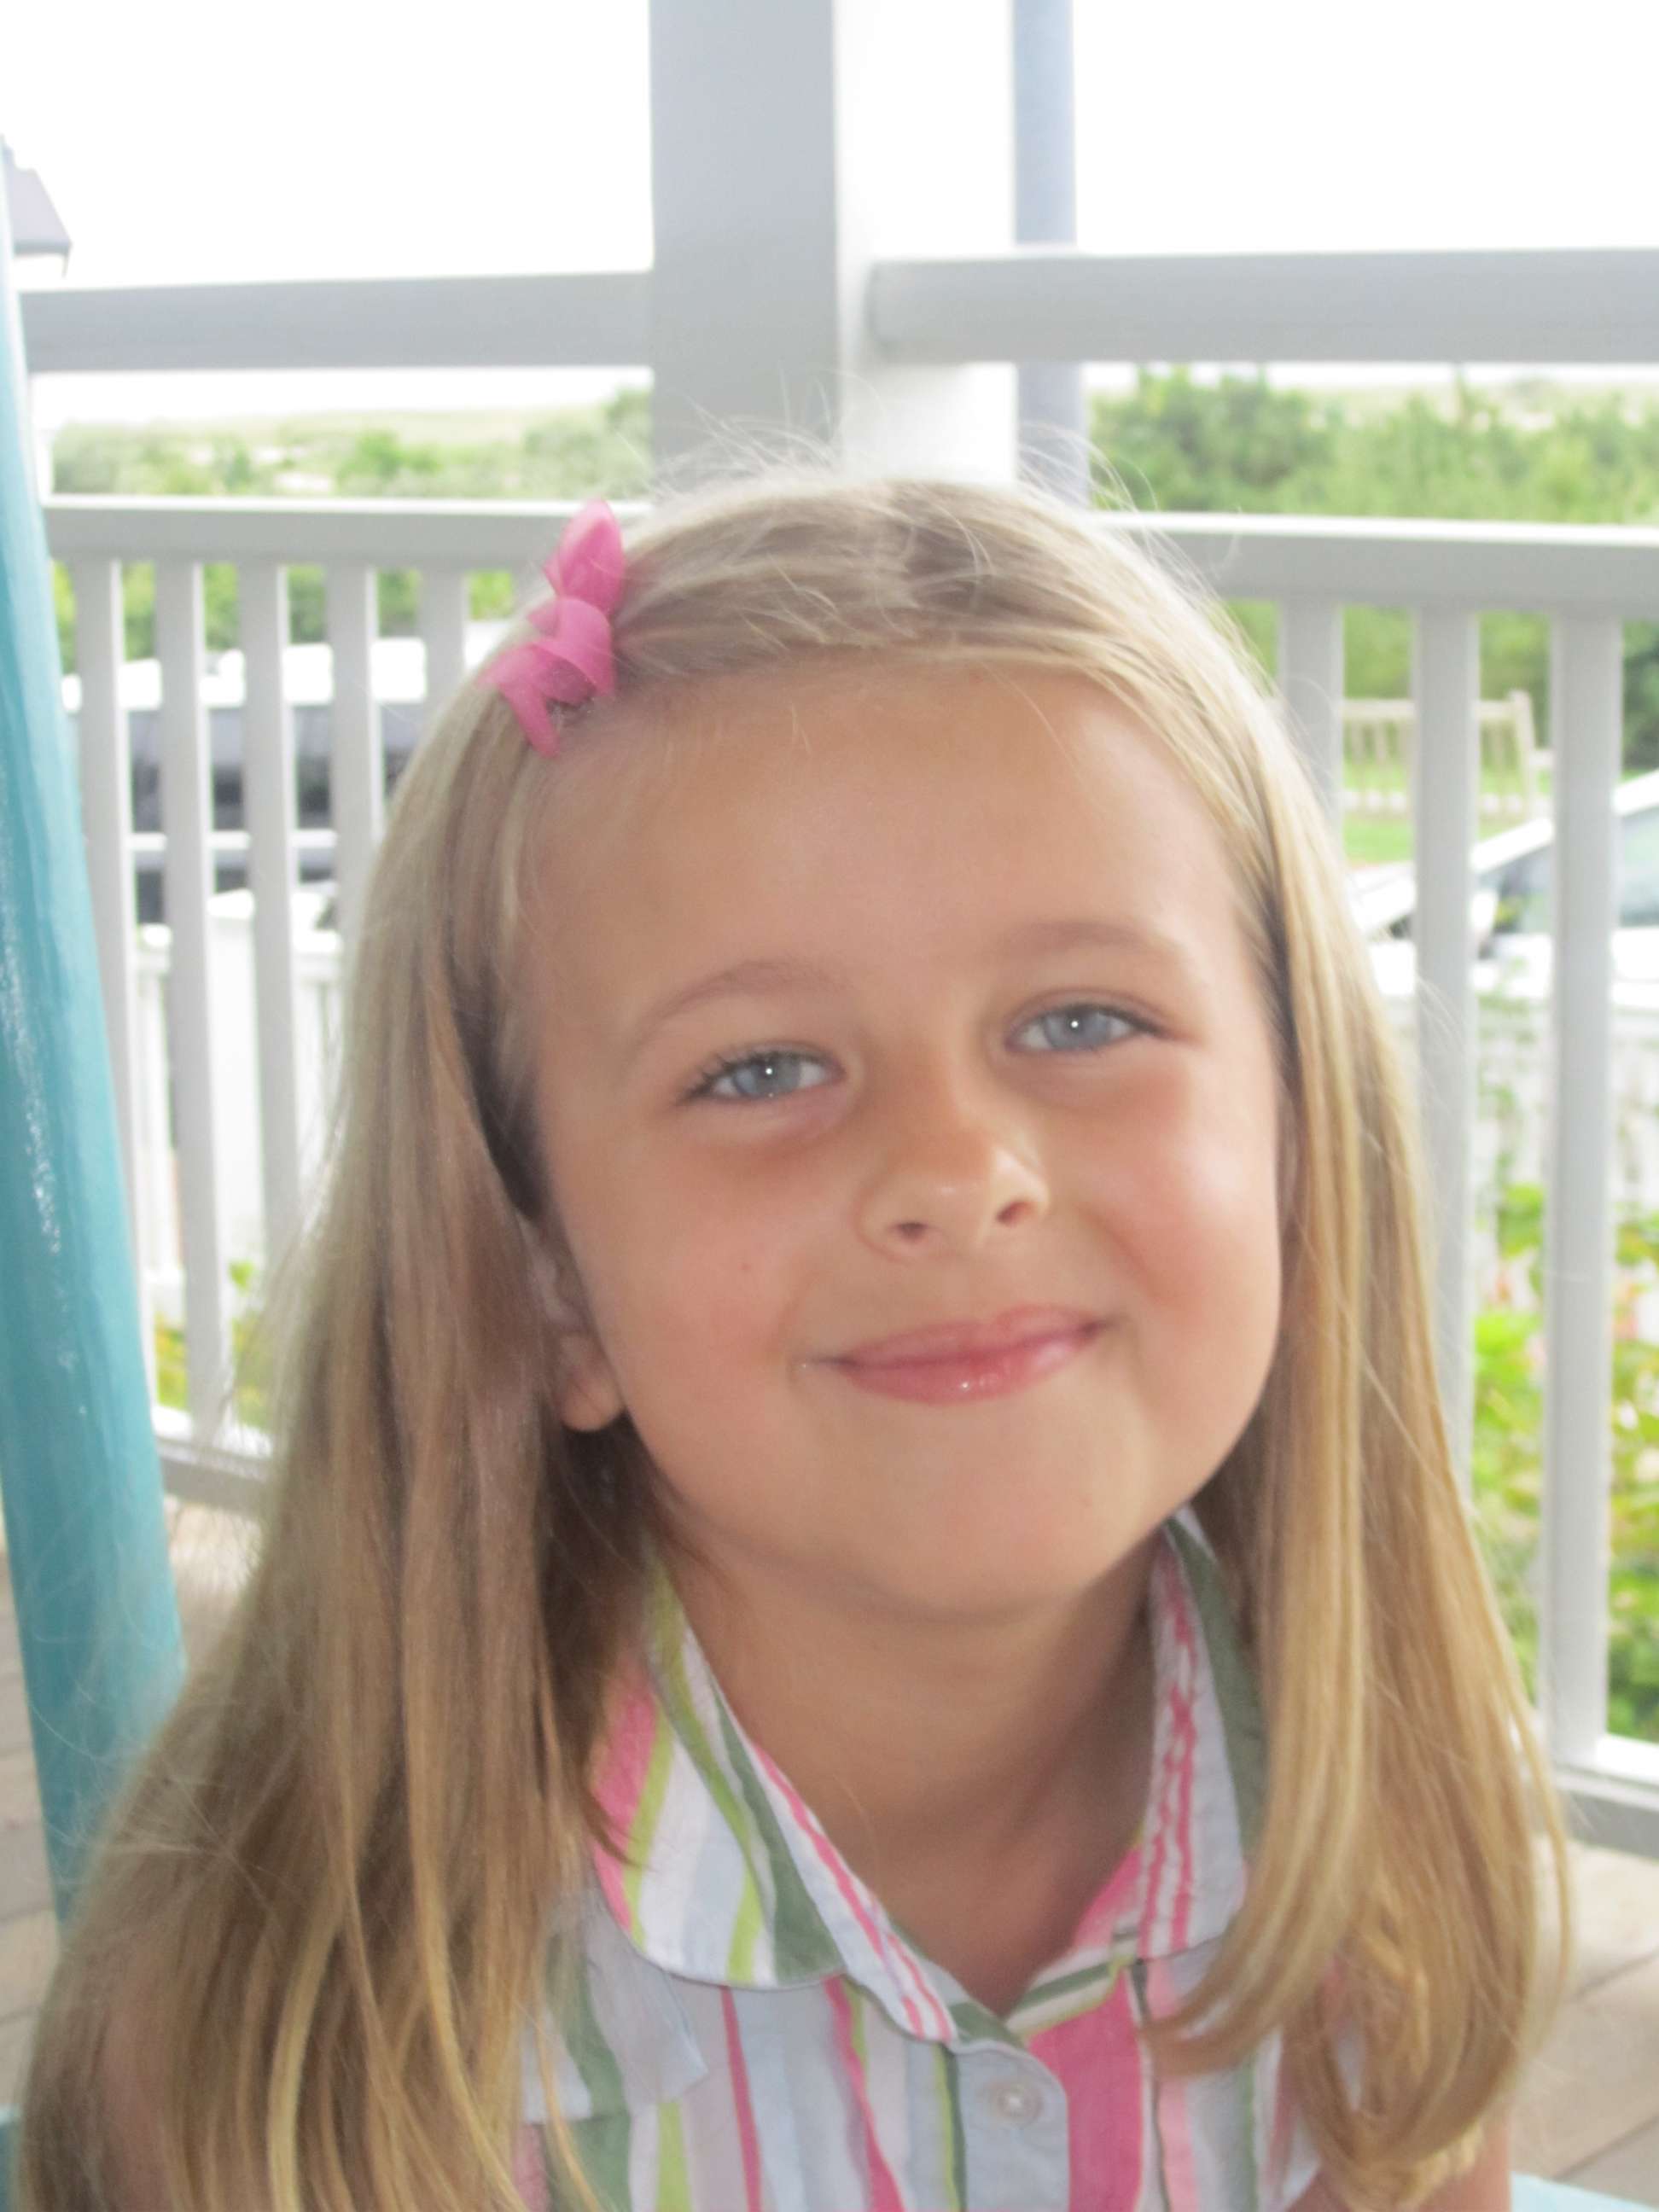 PHOTO: Grace McDonnell was killed on Dec. 14, 2012, when a gunman opened fire at Sandy Hook elementary school in Newtown, Conn.